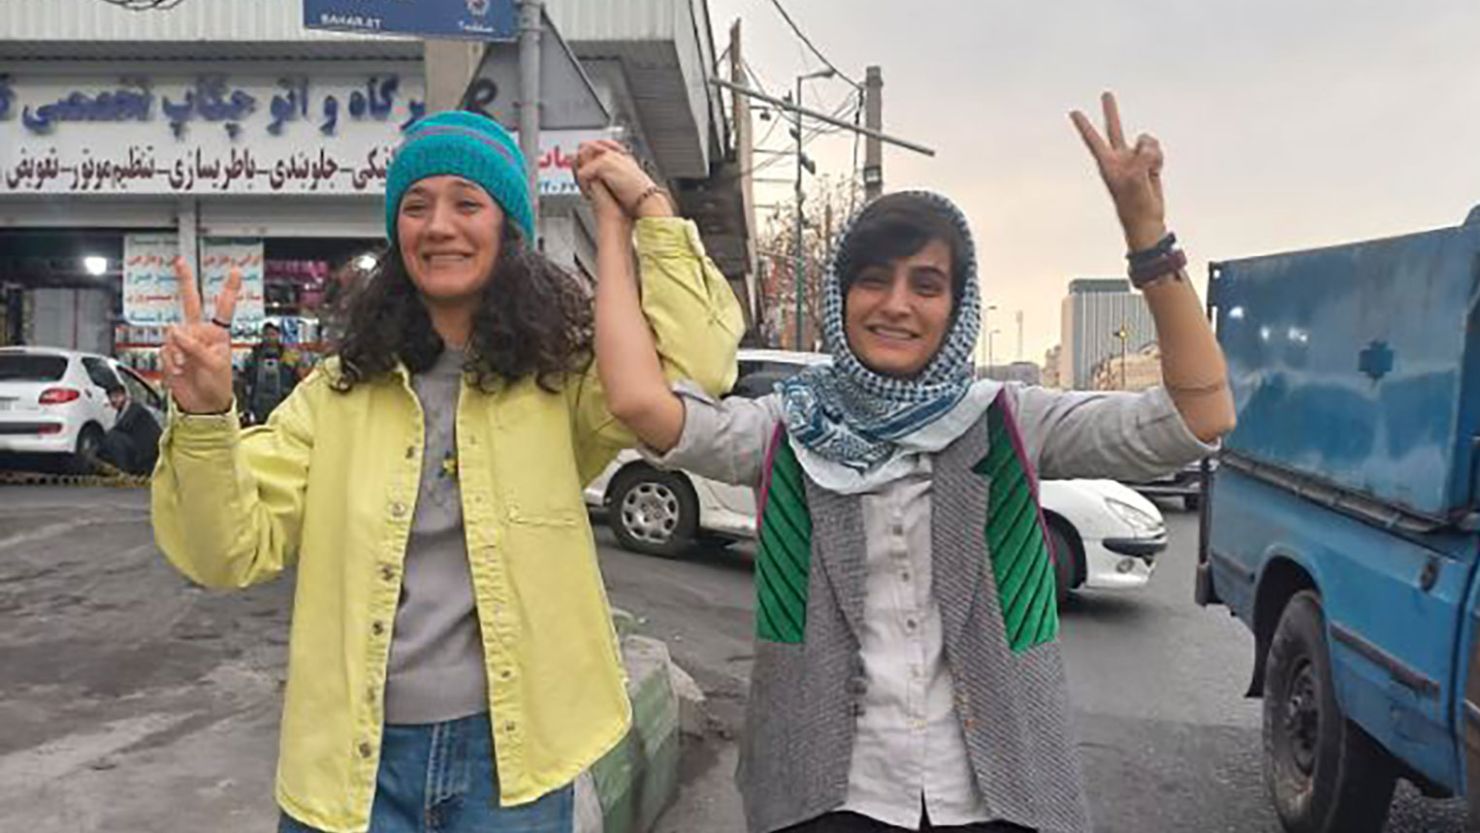 Journalists Niloofar Hamedi and Elaheh Mohammadi were released from a Tehran jail on Sunday, January 14.